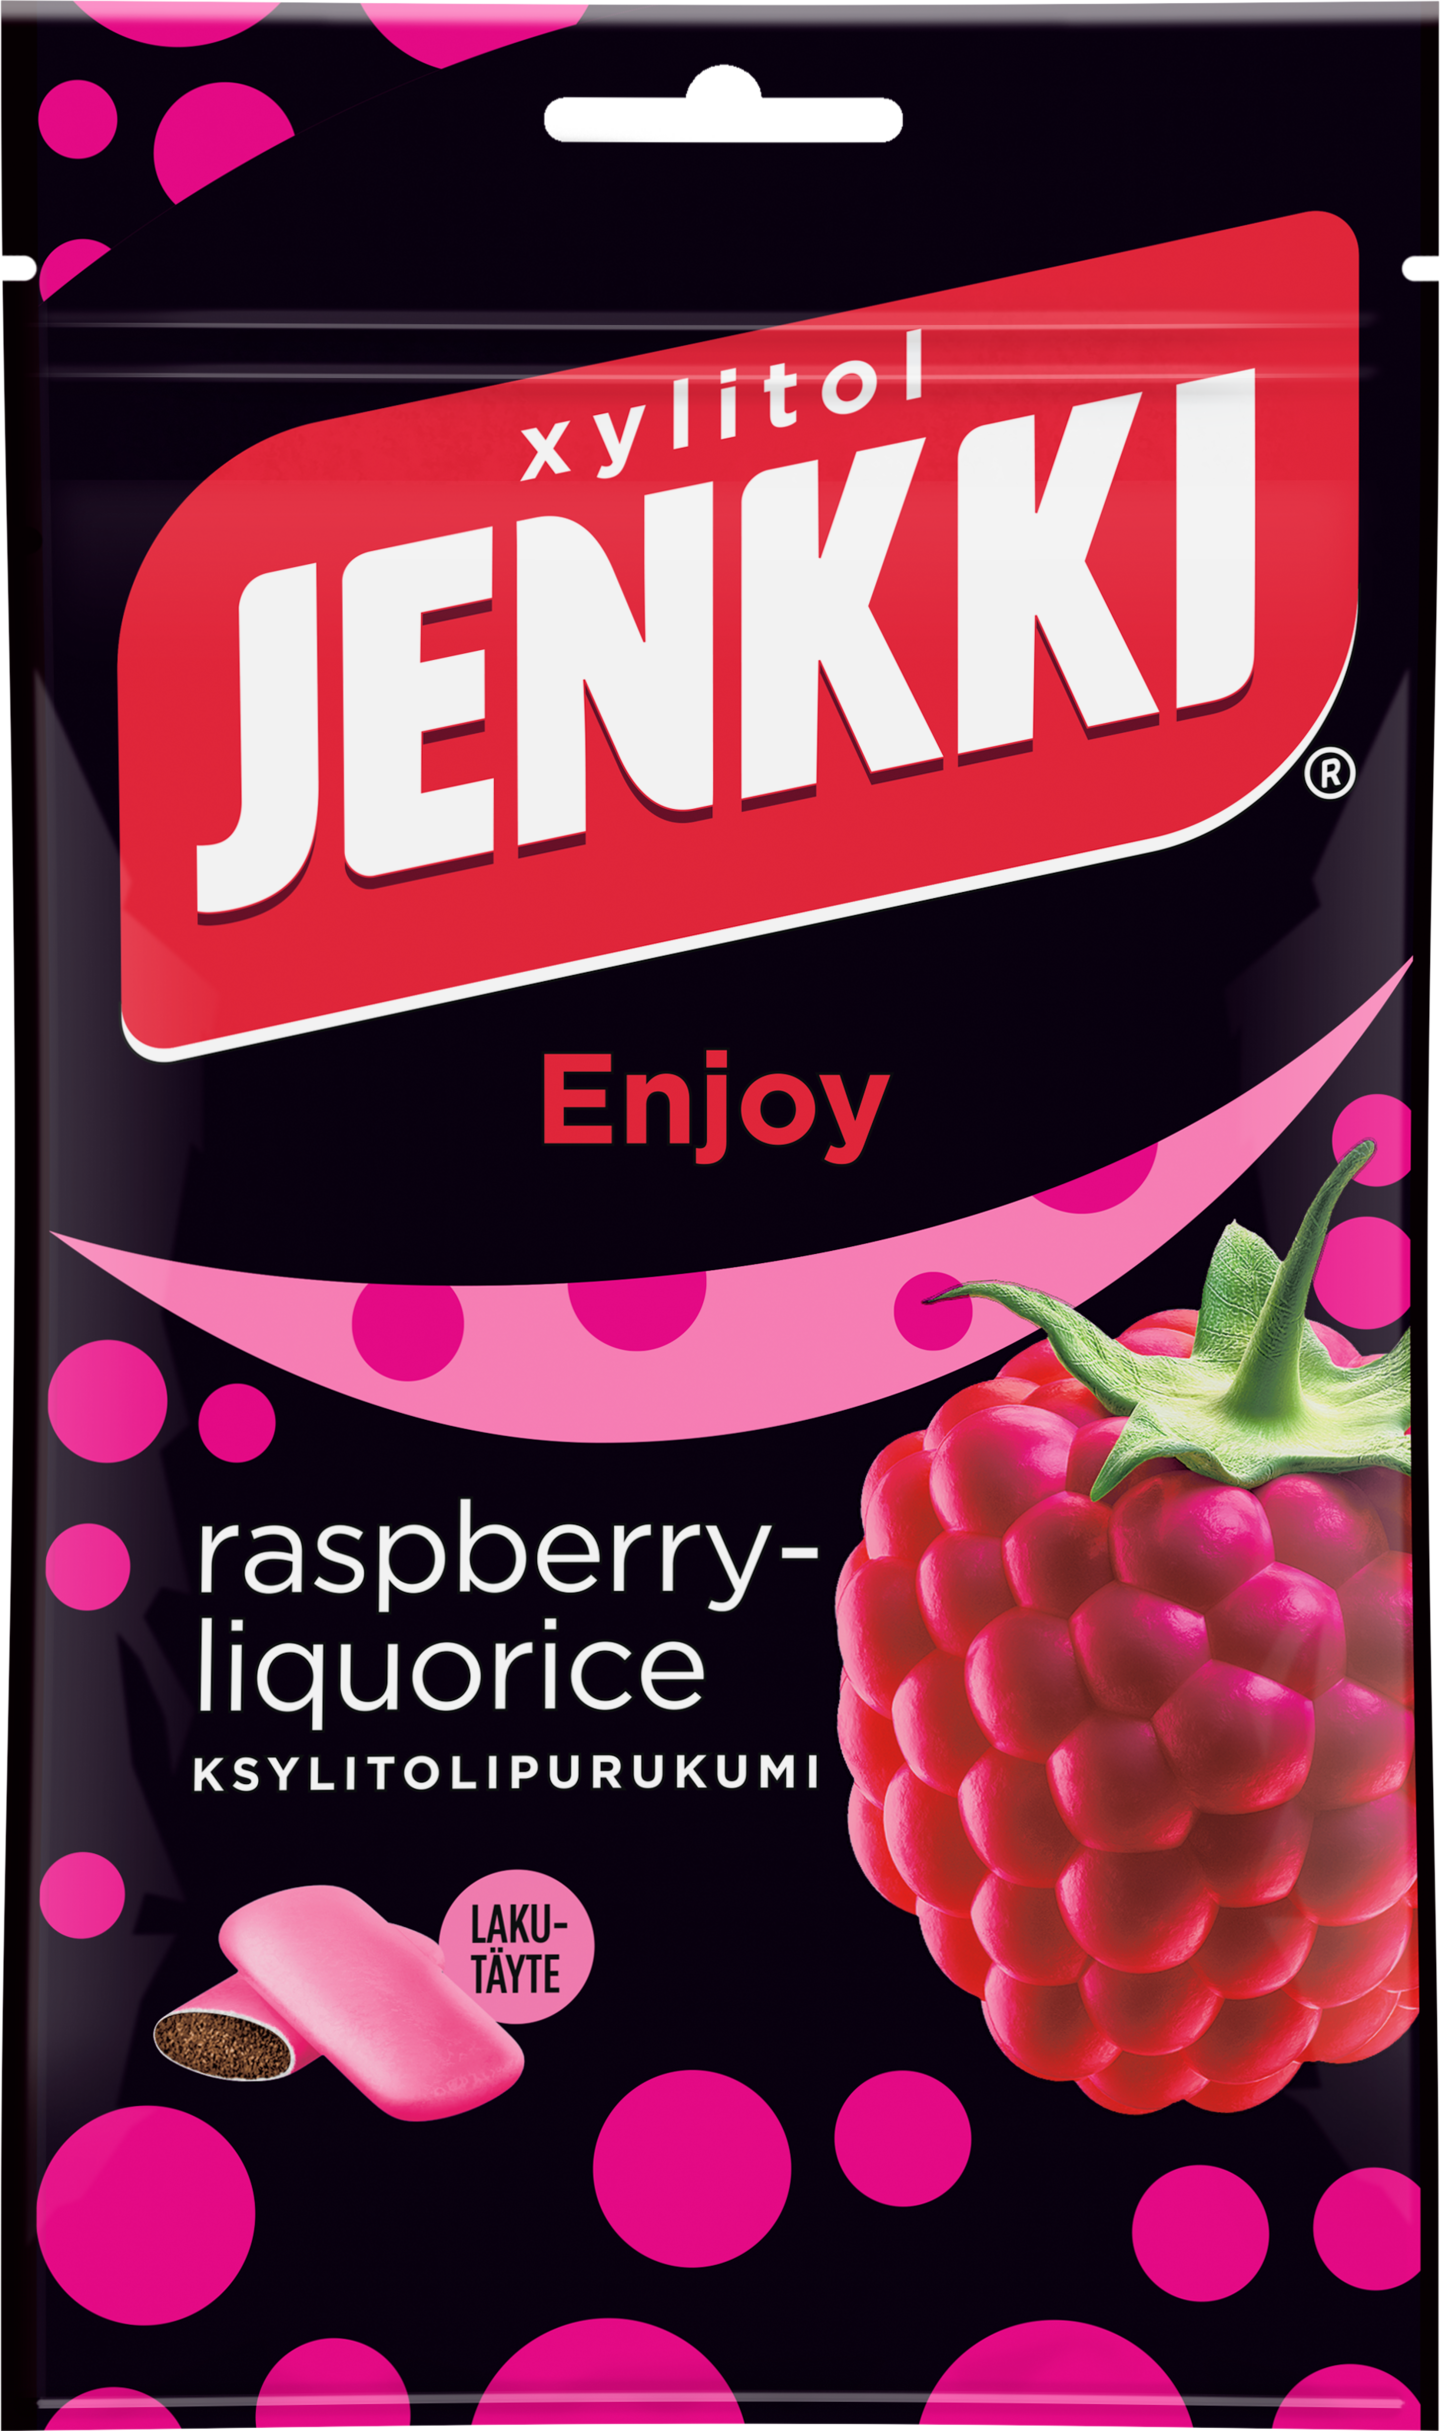 Jenkki Enjoy raspberry-liquorice ksylitolipurukumi 100g